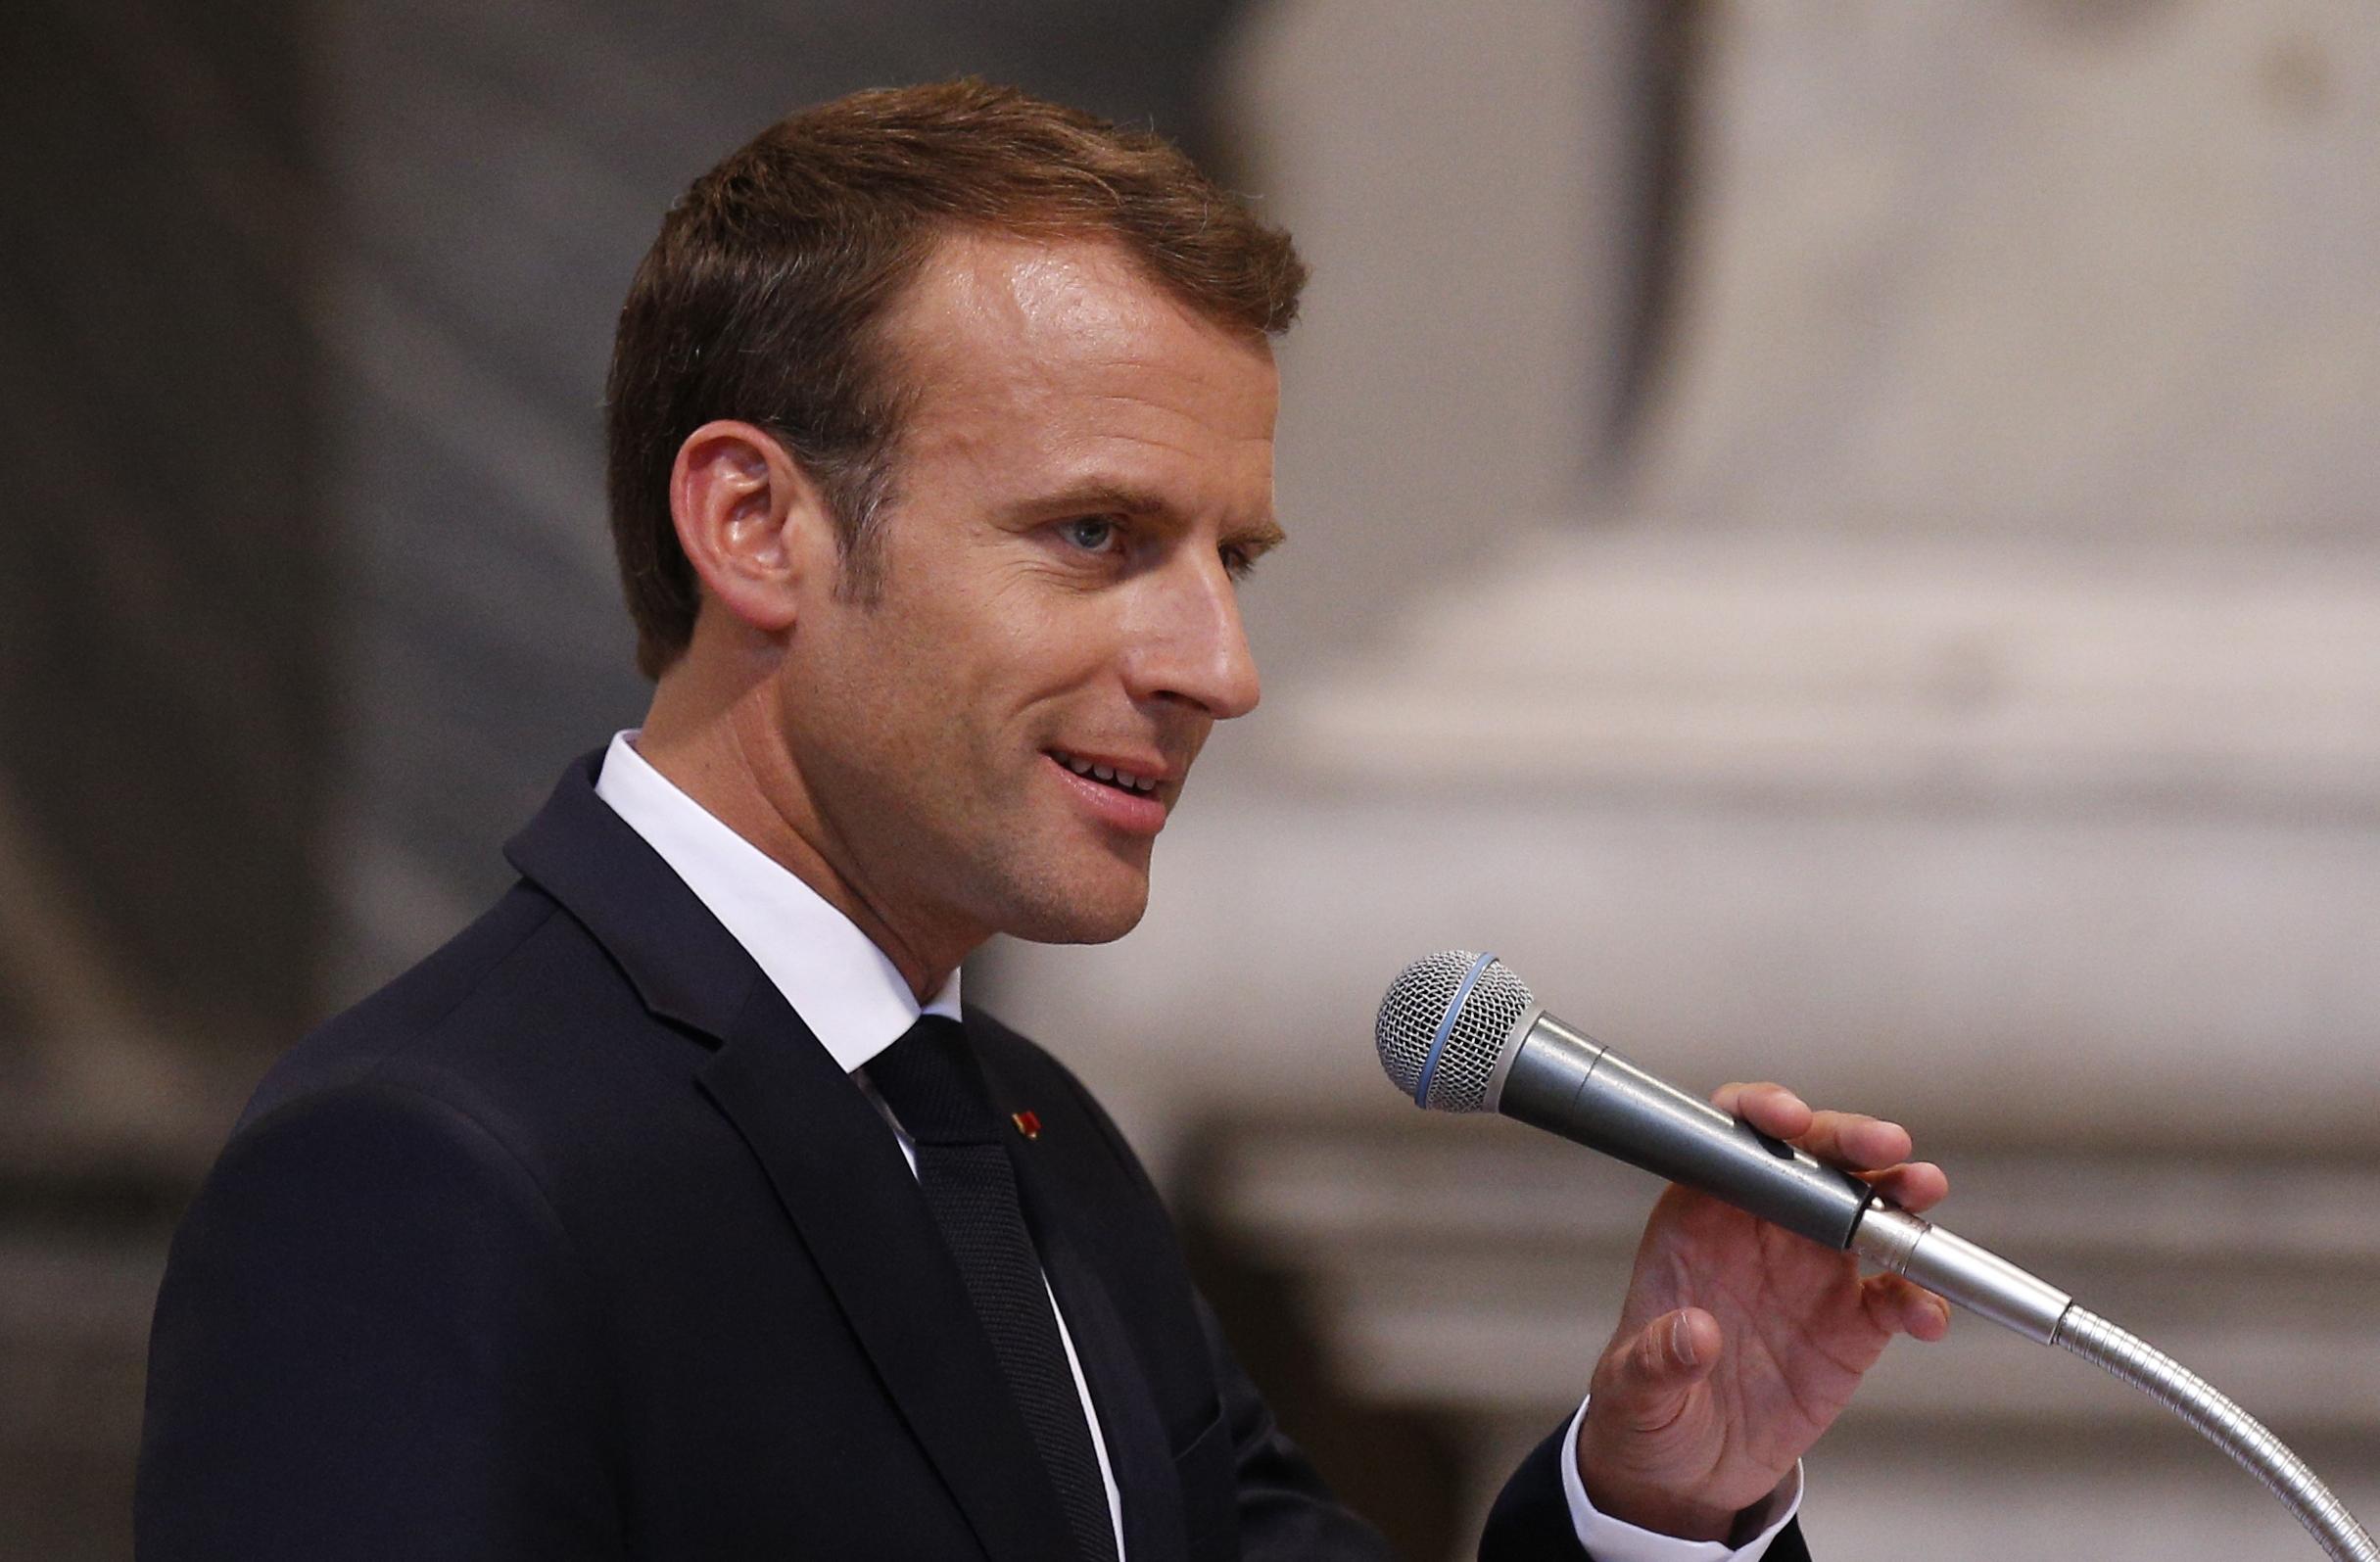 Make abortion a 'fundamental right', says Macron to EU leaders